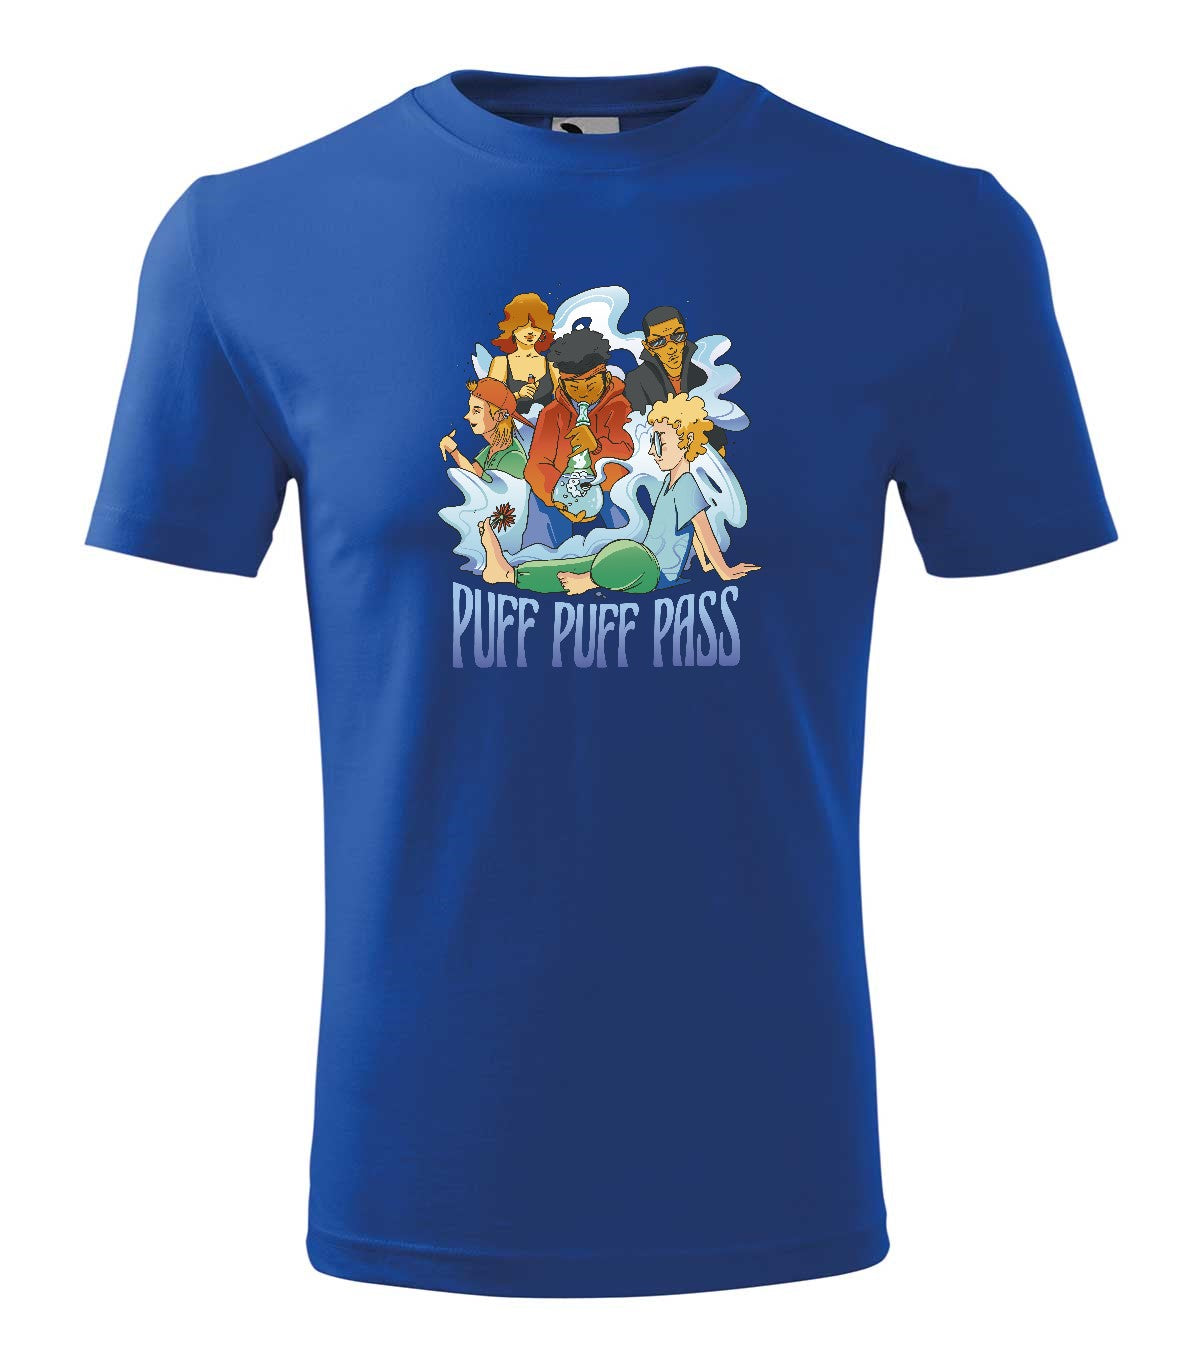 Puff Puff Pass gyerek technikai póló